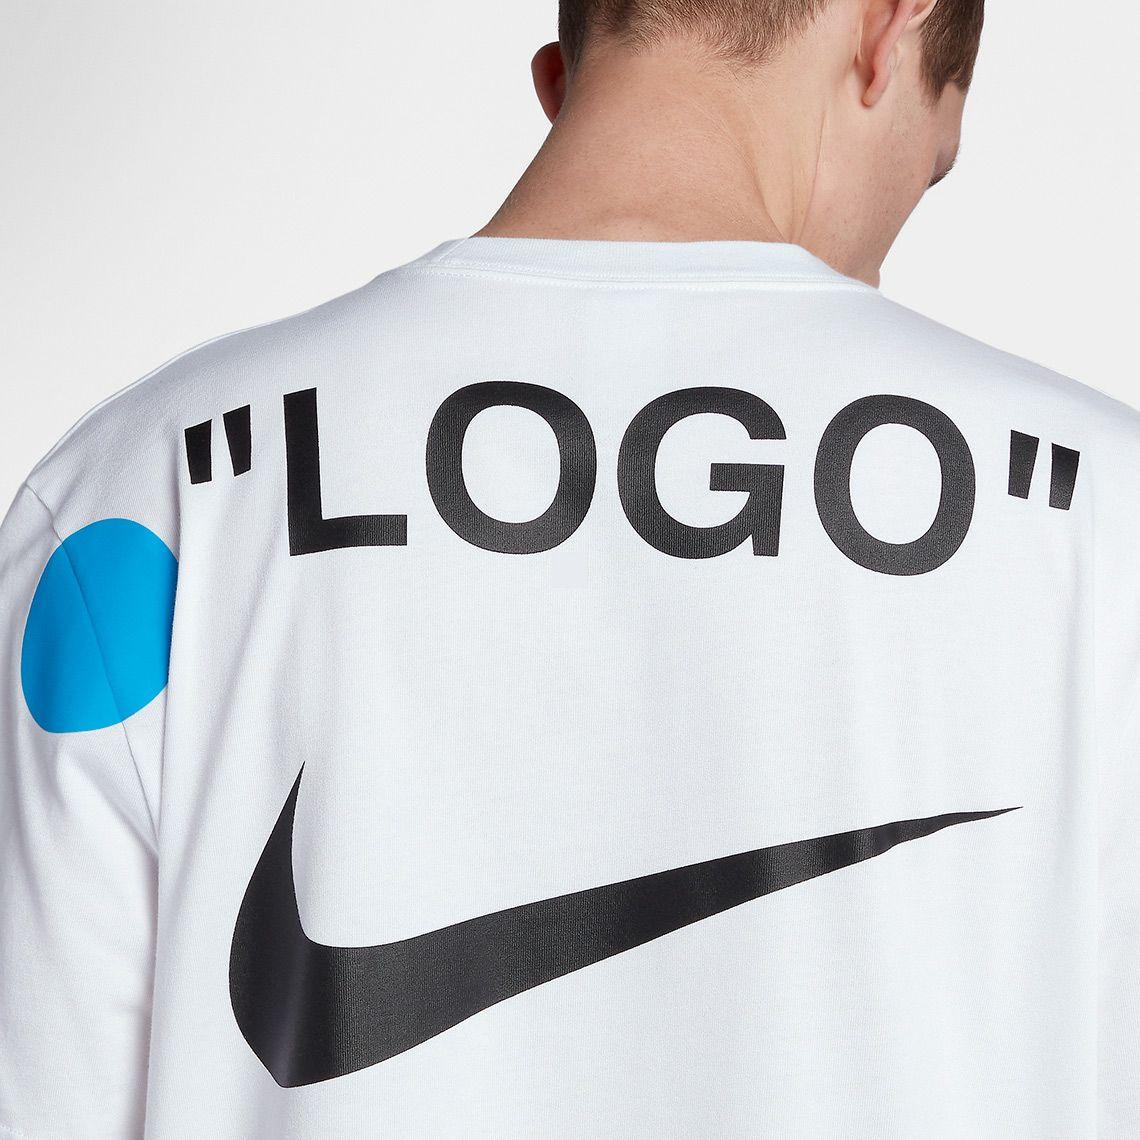 Off White Nike Logo - OFF WHITE Nike Football Apparel Release Info